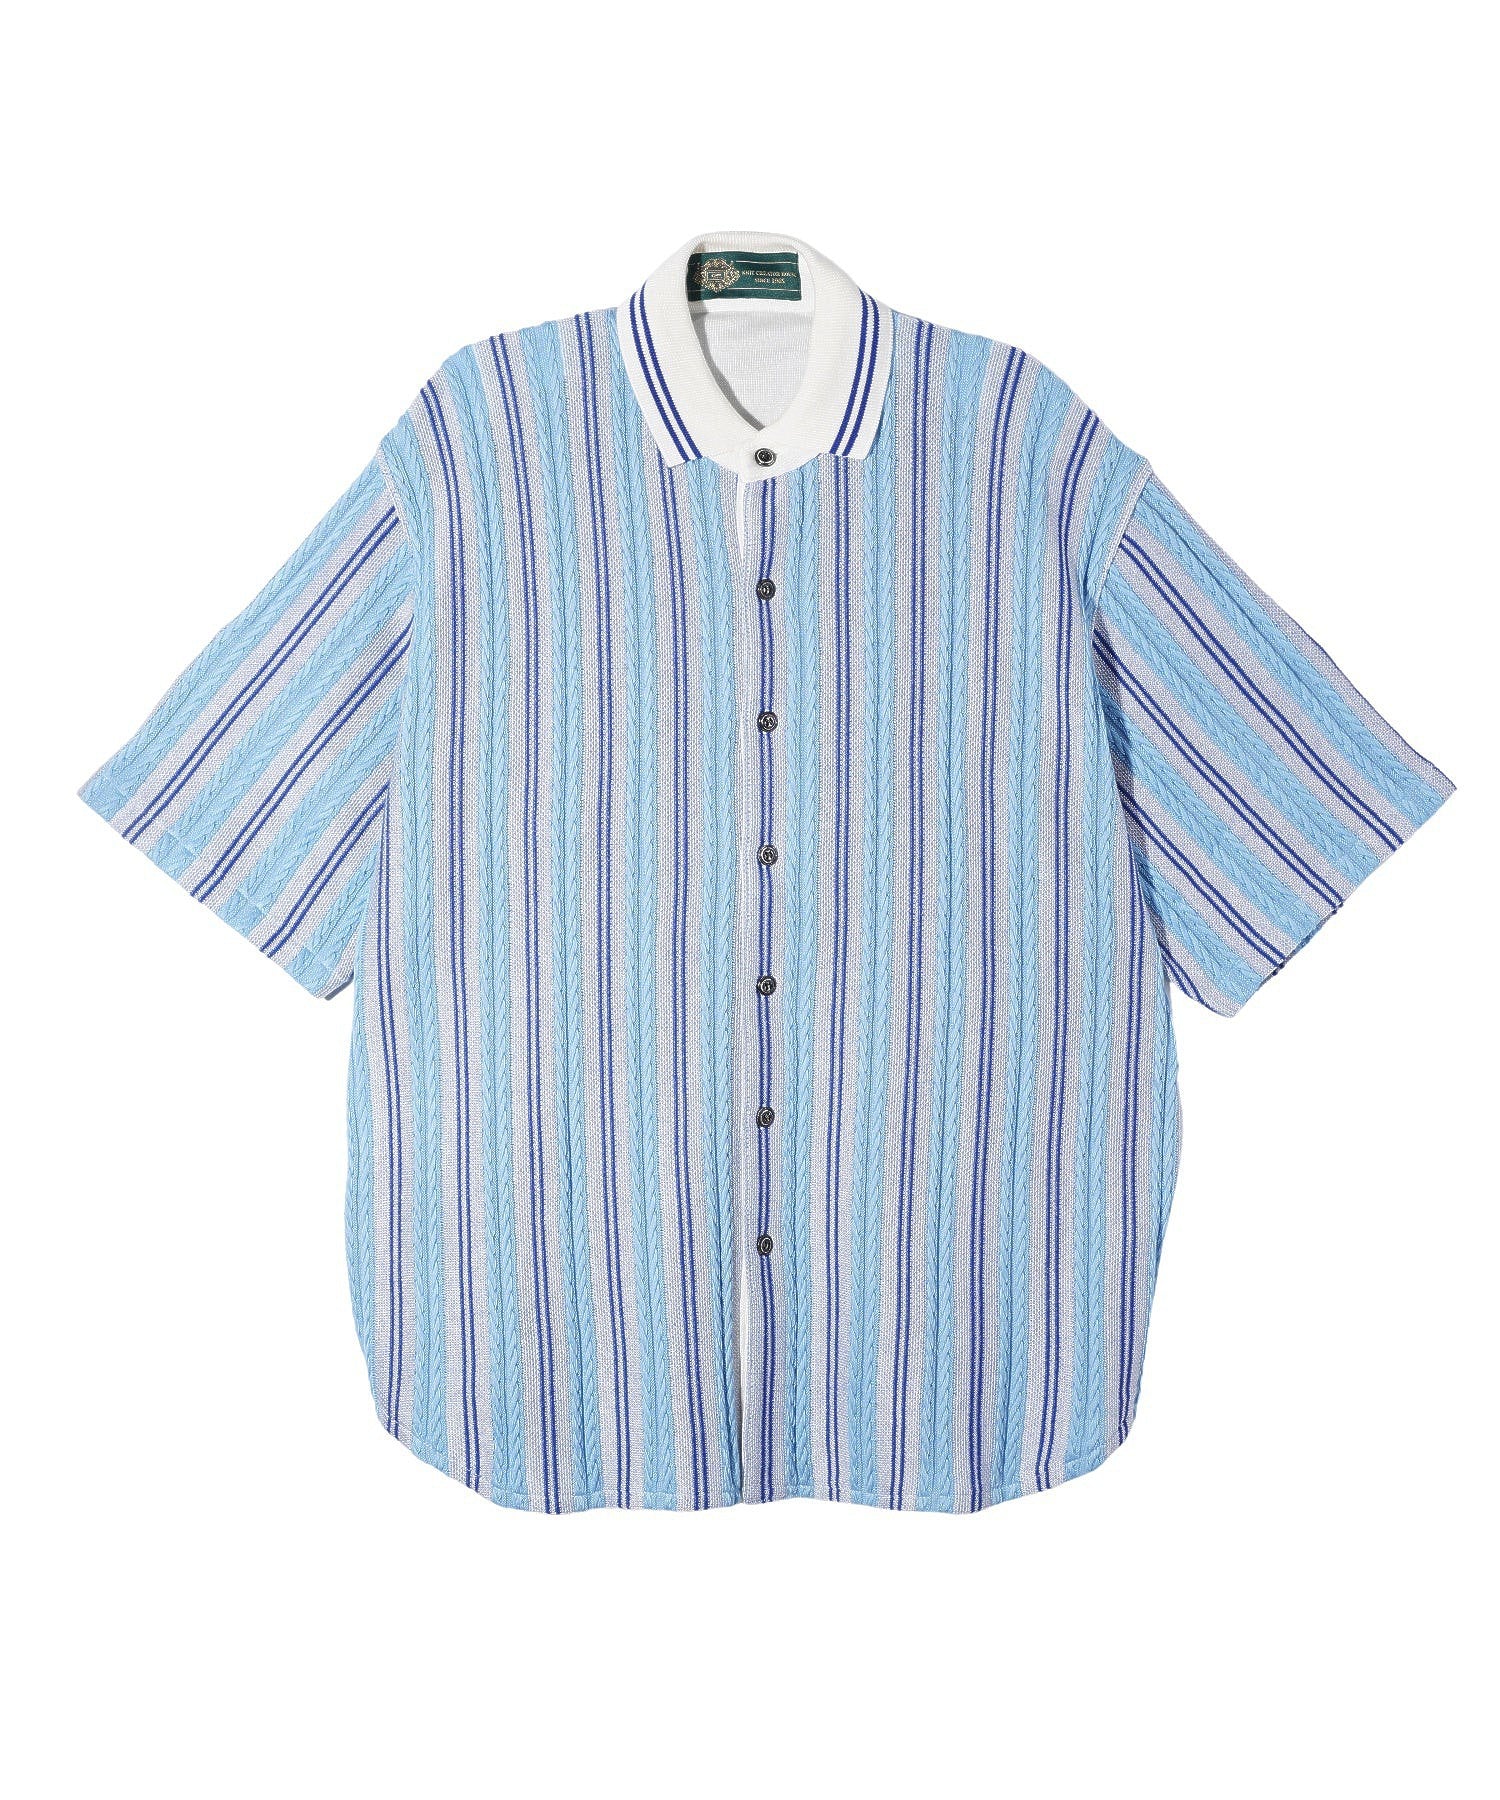 gim context/ジム コンテキスト/Stripe Open Collar Shirt/23205110